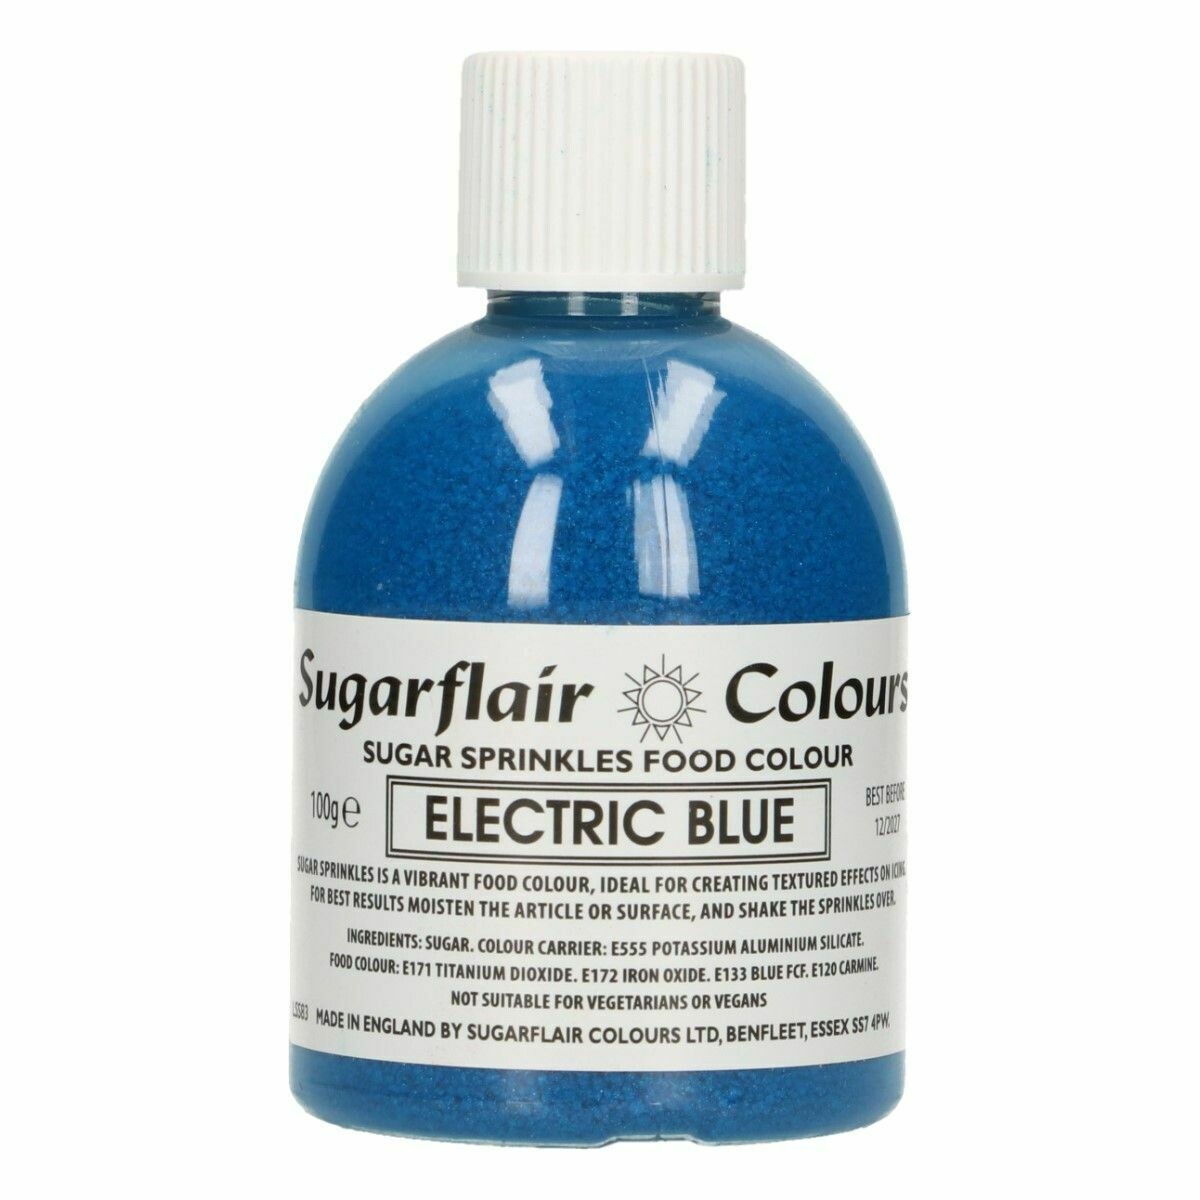 Sugarflair -Sparkling Sugar Sprinkles -ELECTRIC BLUE 100g - Χρωματιστή Ζάχαρη - Μπλε Ηλεκτρίκ